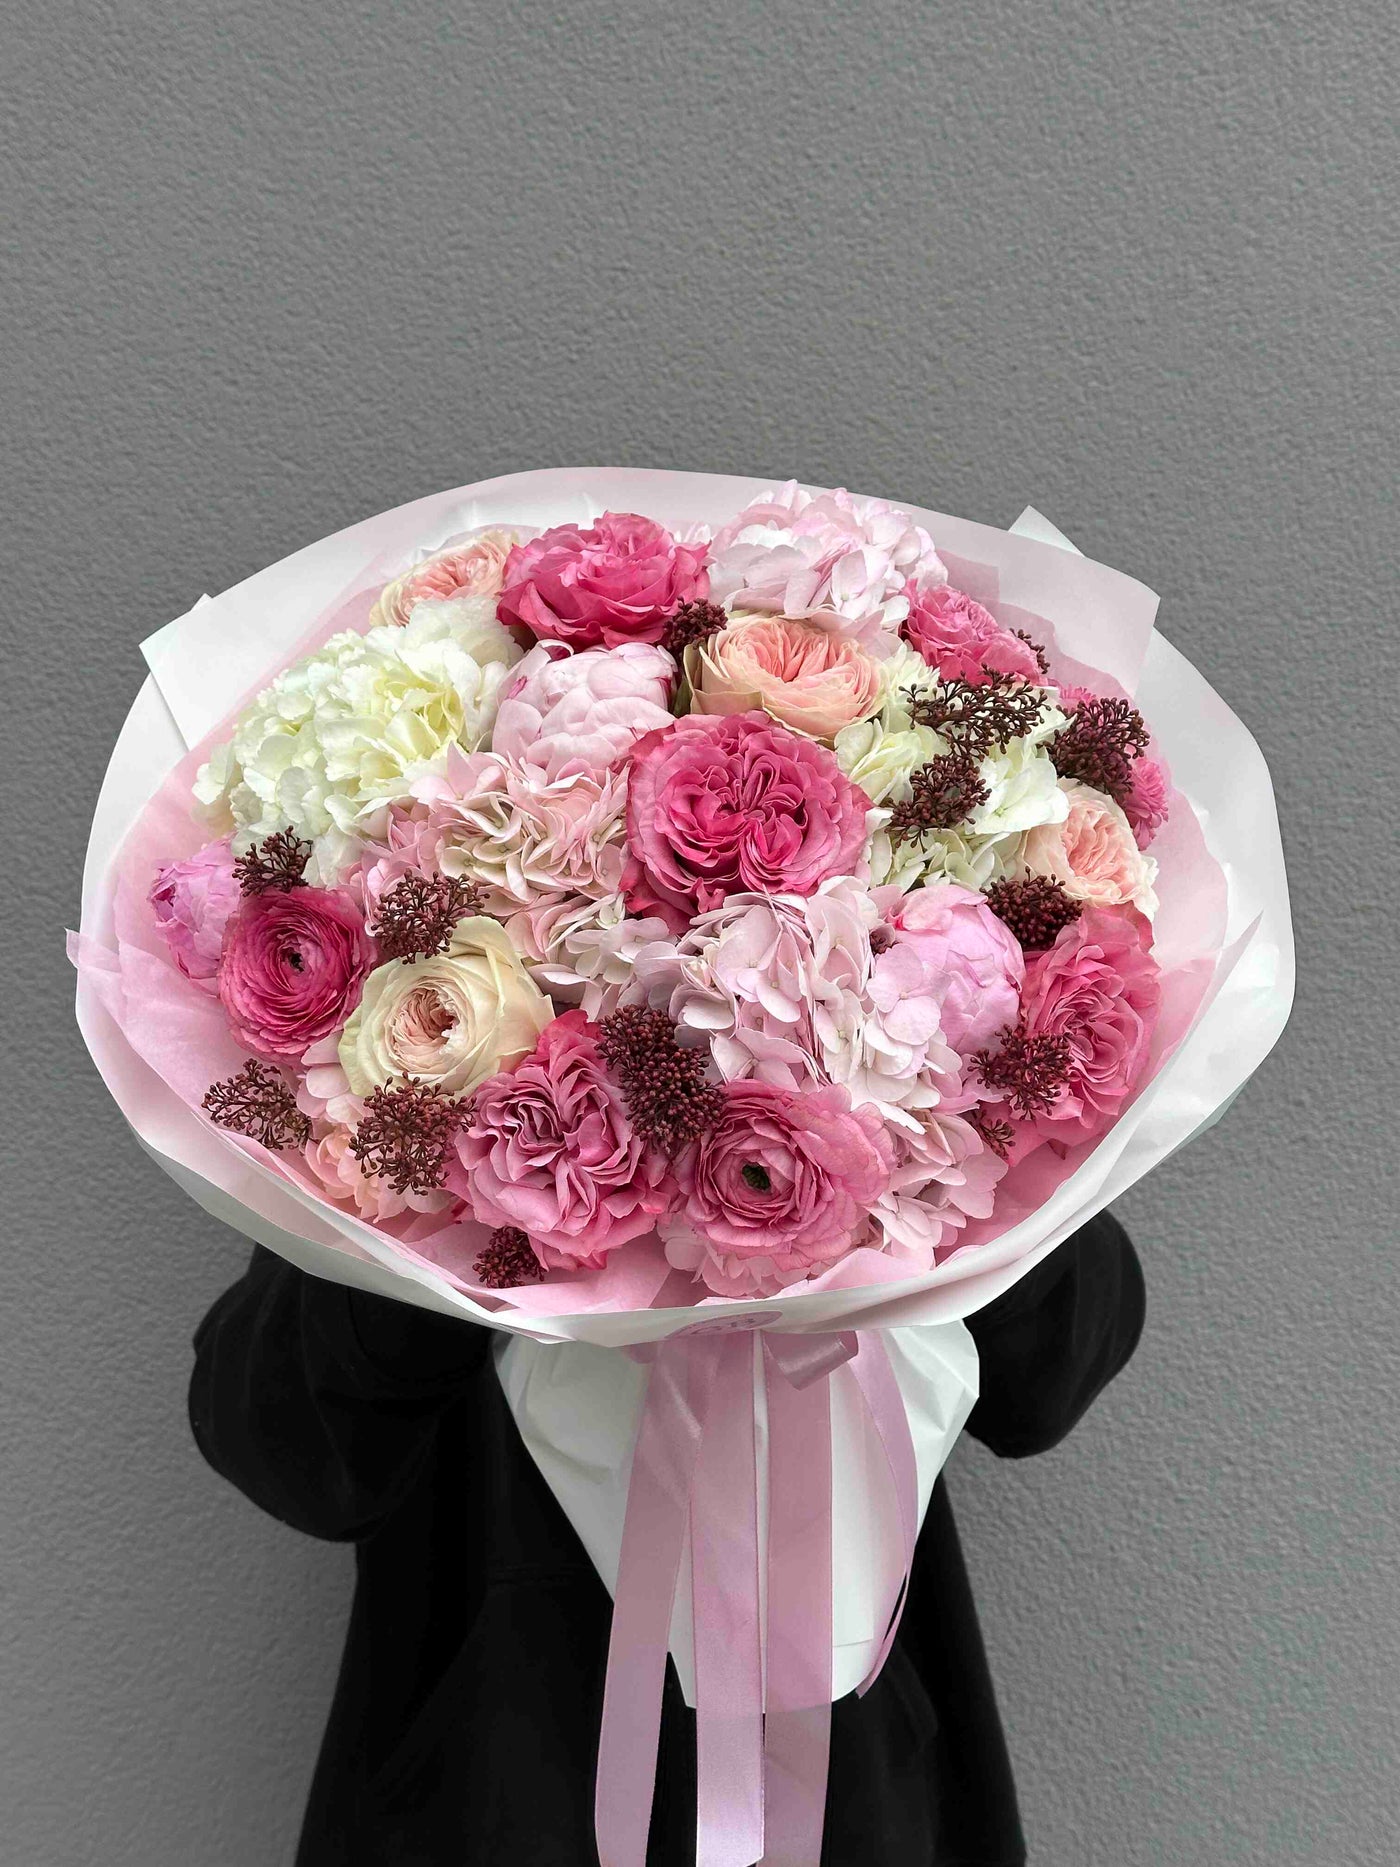 Bukiet "Romantic" kwiaty giftbar.pl 